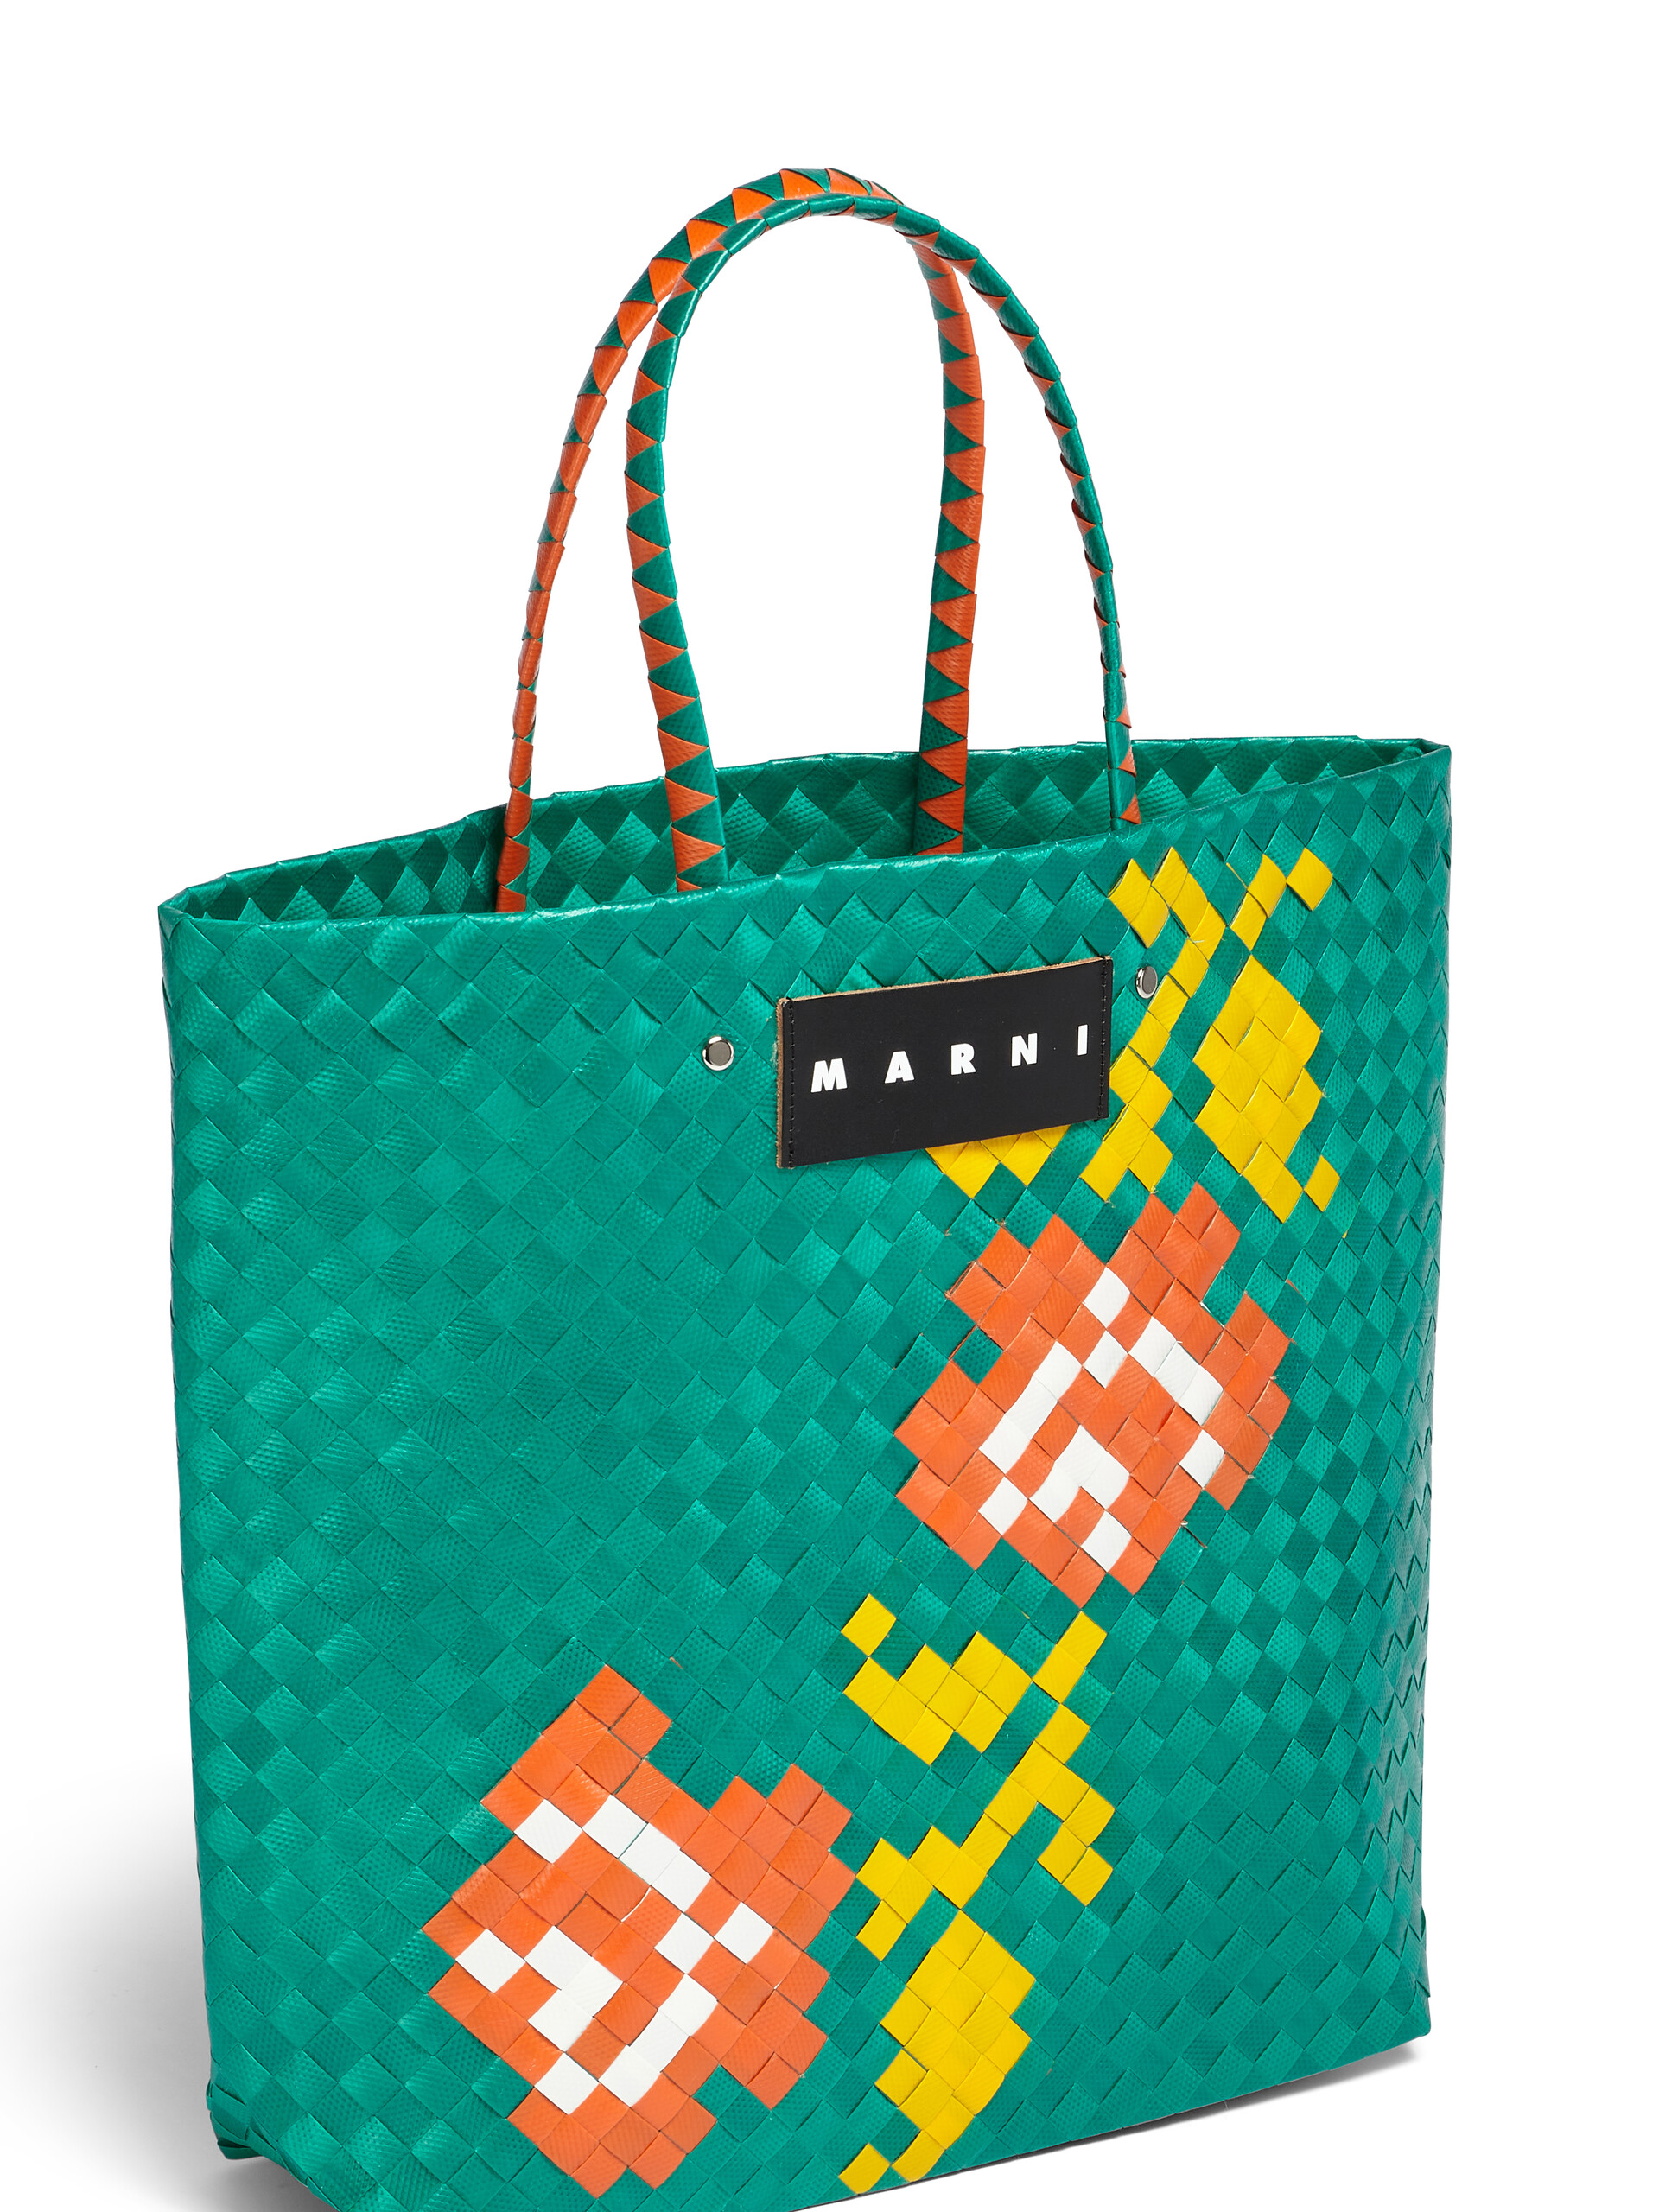 MARNI MARKET medium bag in green flower motif - Bags - Image 4